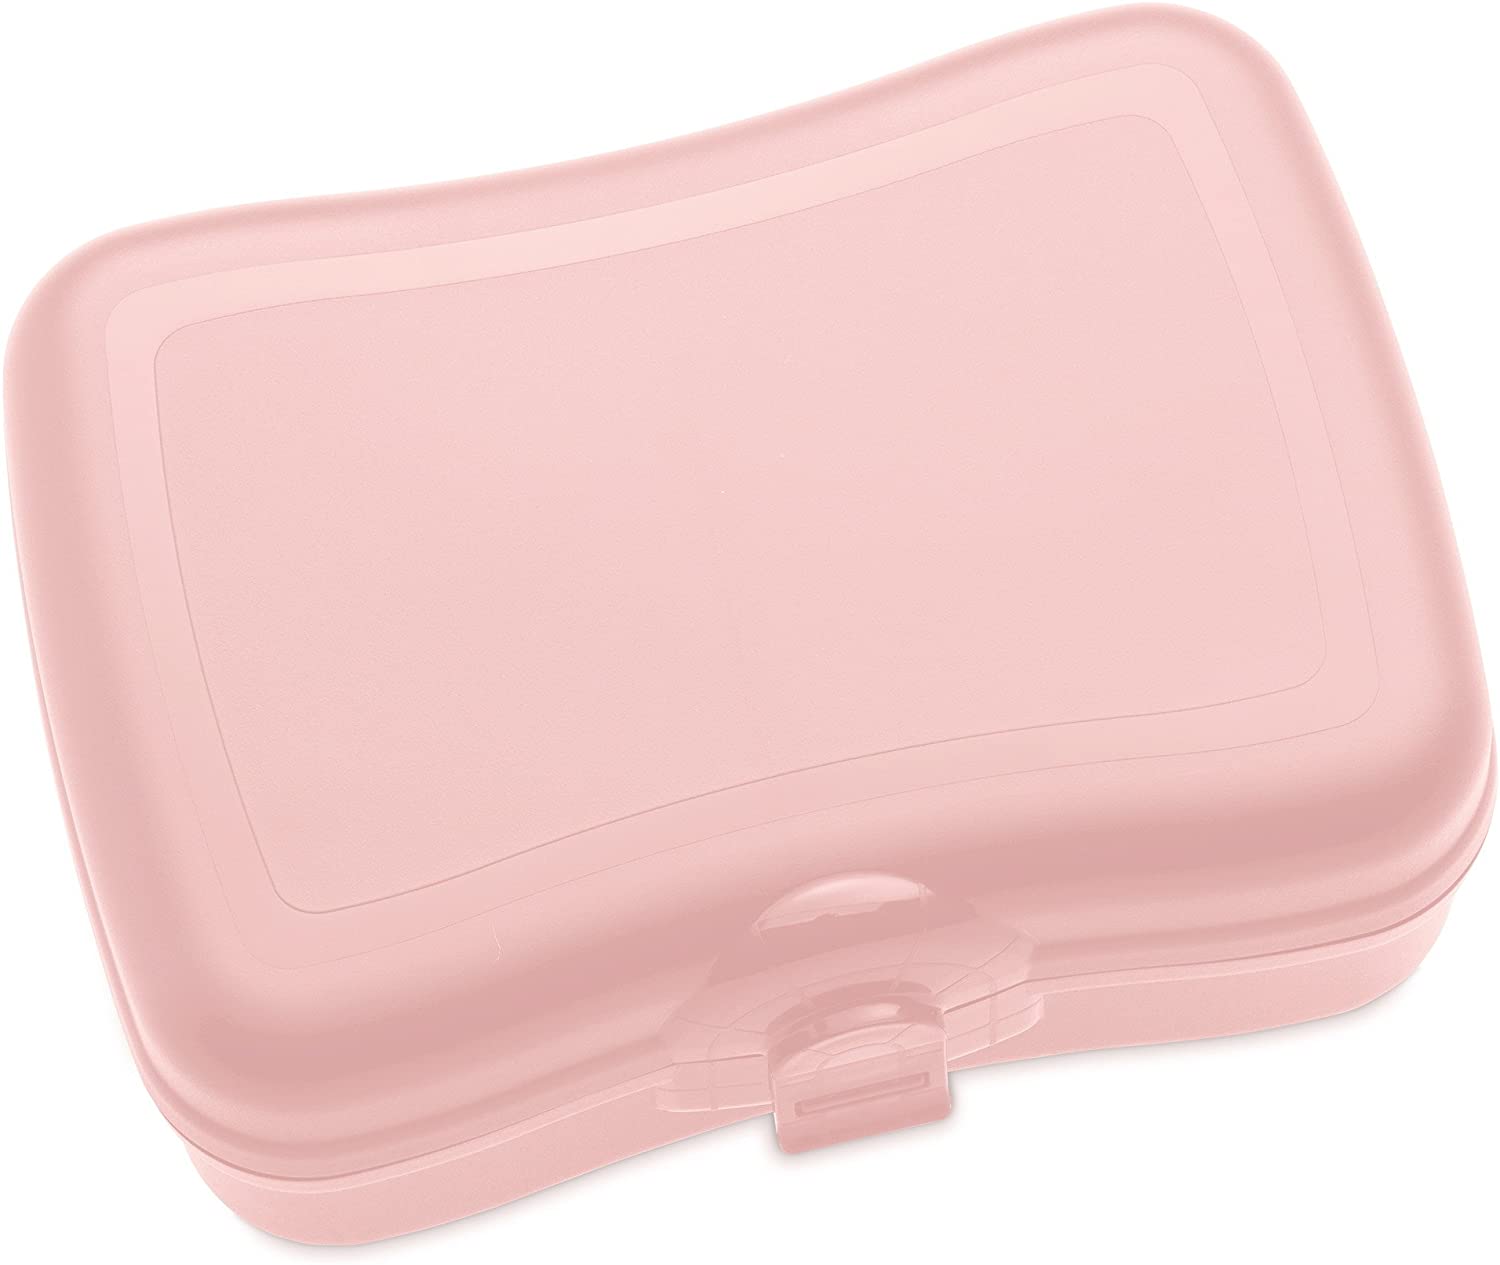 koziol 3081638 Basic Lunch Box, Plastic, Powder Pink, 12.2 x 16.8 x 6.6 cm